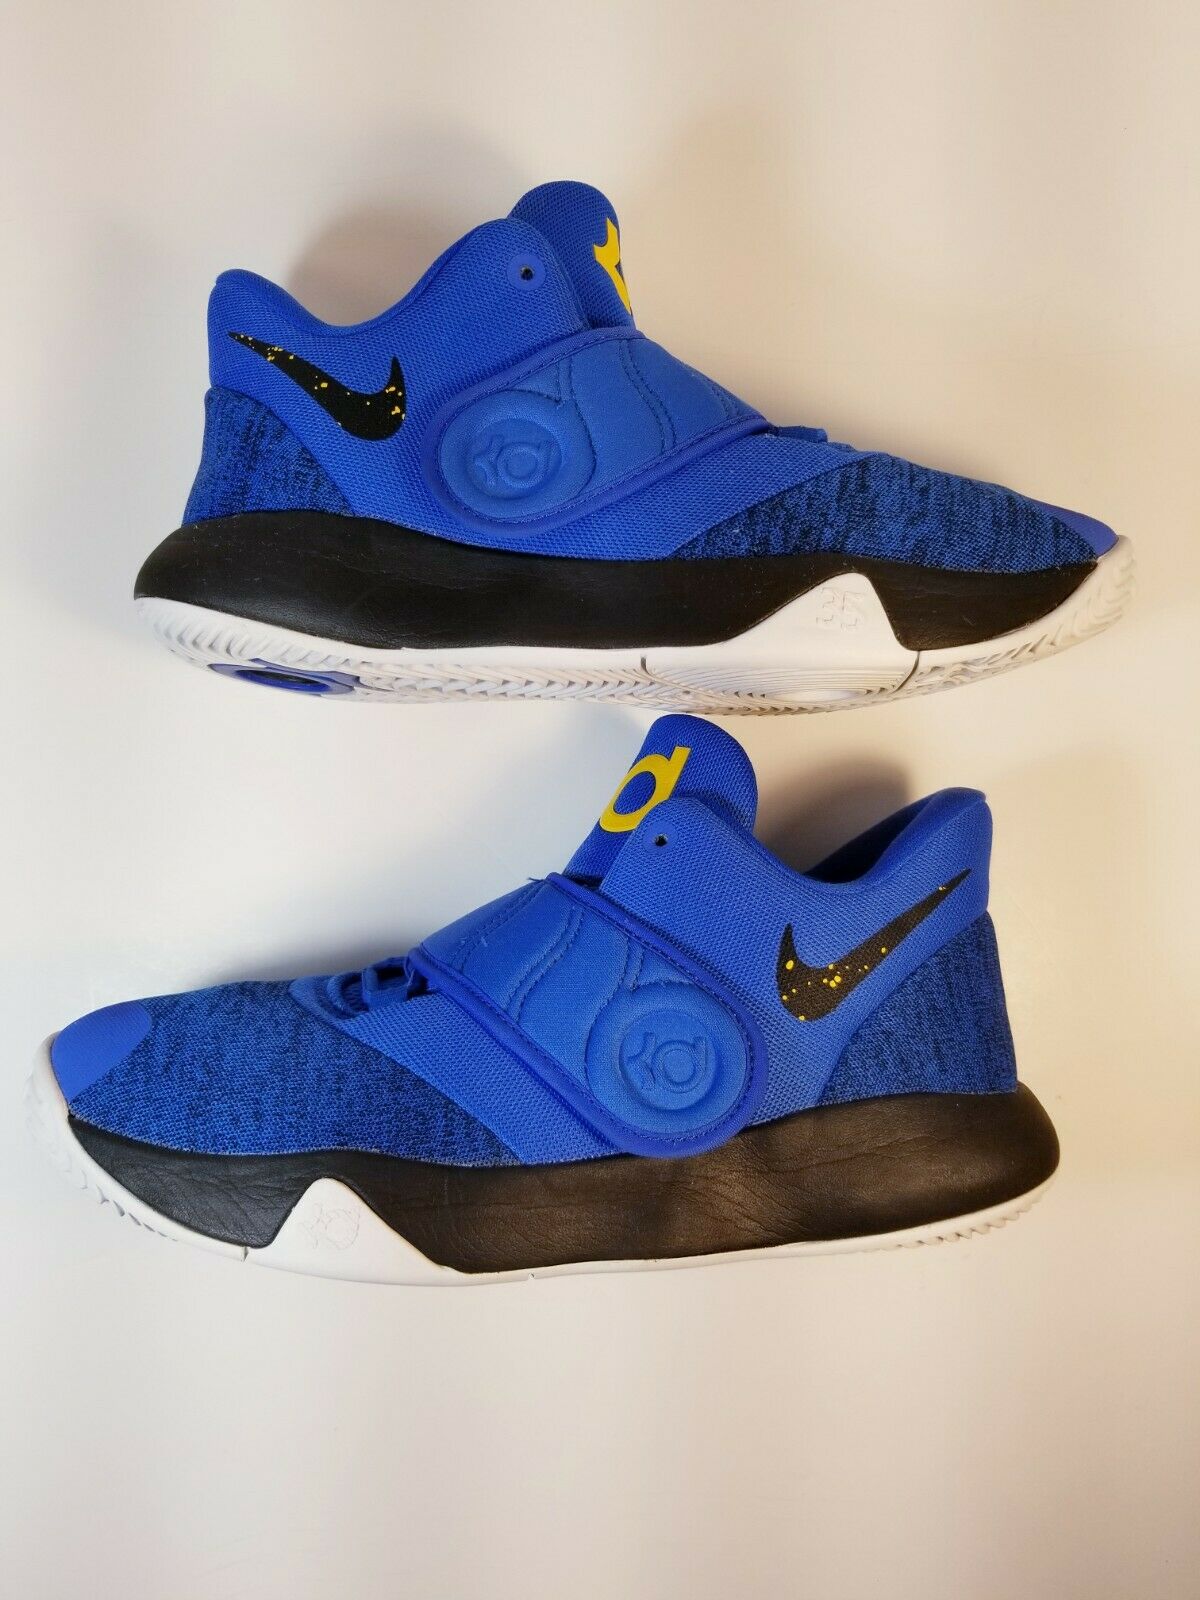 Nike Boys KD Trey 5 AH7172-401 Blue Black Basketball Shoes Lace Up Size 6.5Y